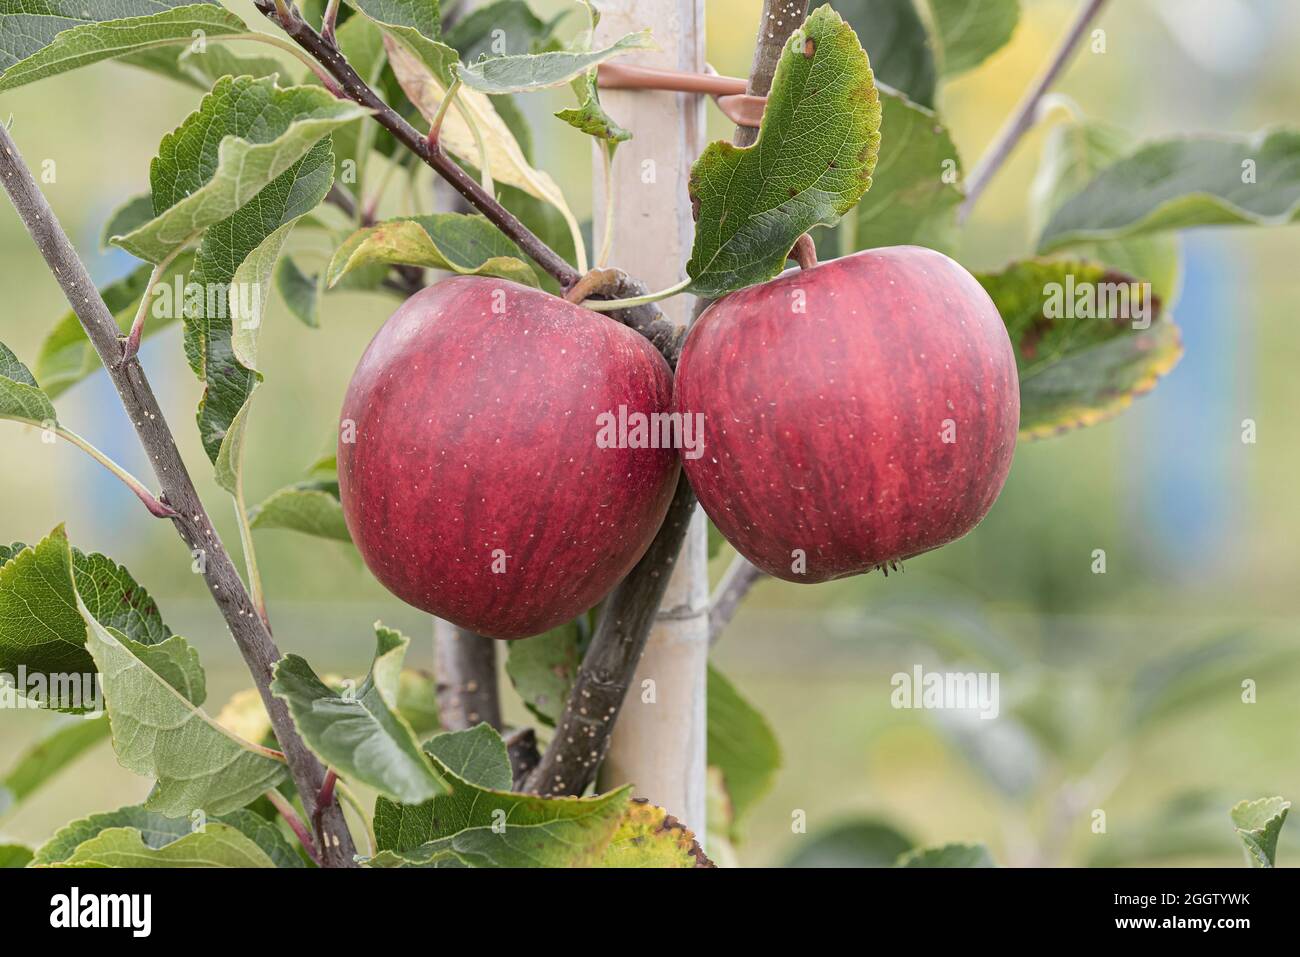 apple (Malus domestica 'Gala Galaxy', Malus domestica Gala Galaxy), apples on a tre, cultivar Gala Galaxy Stock Photo